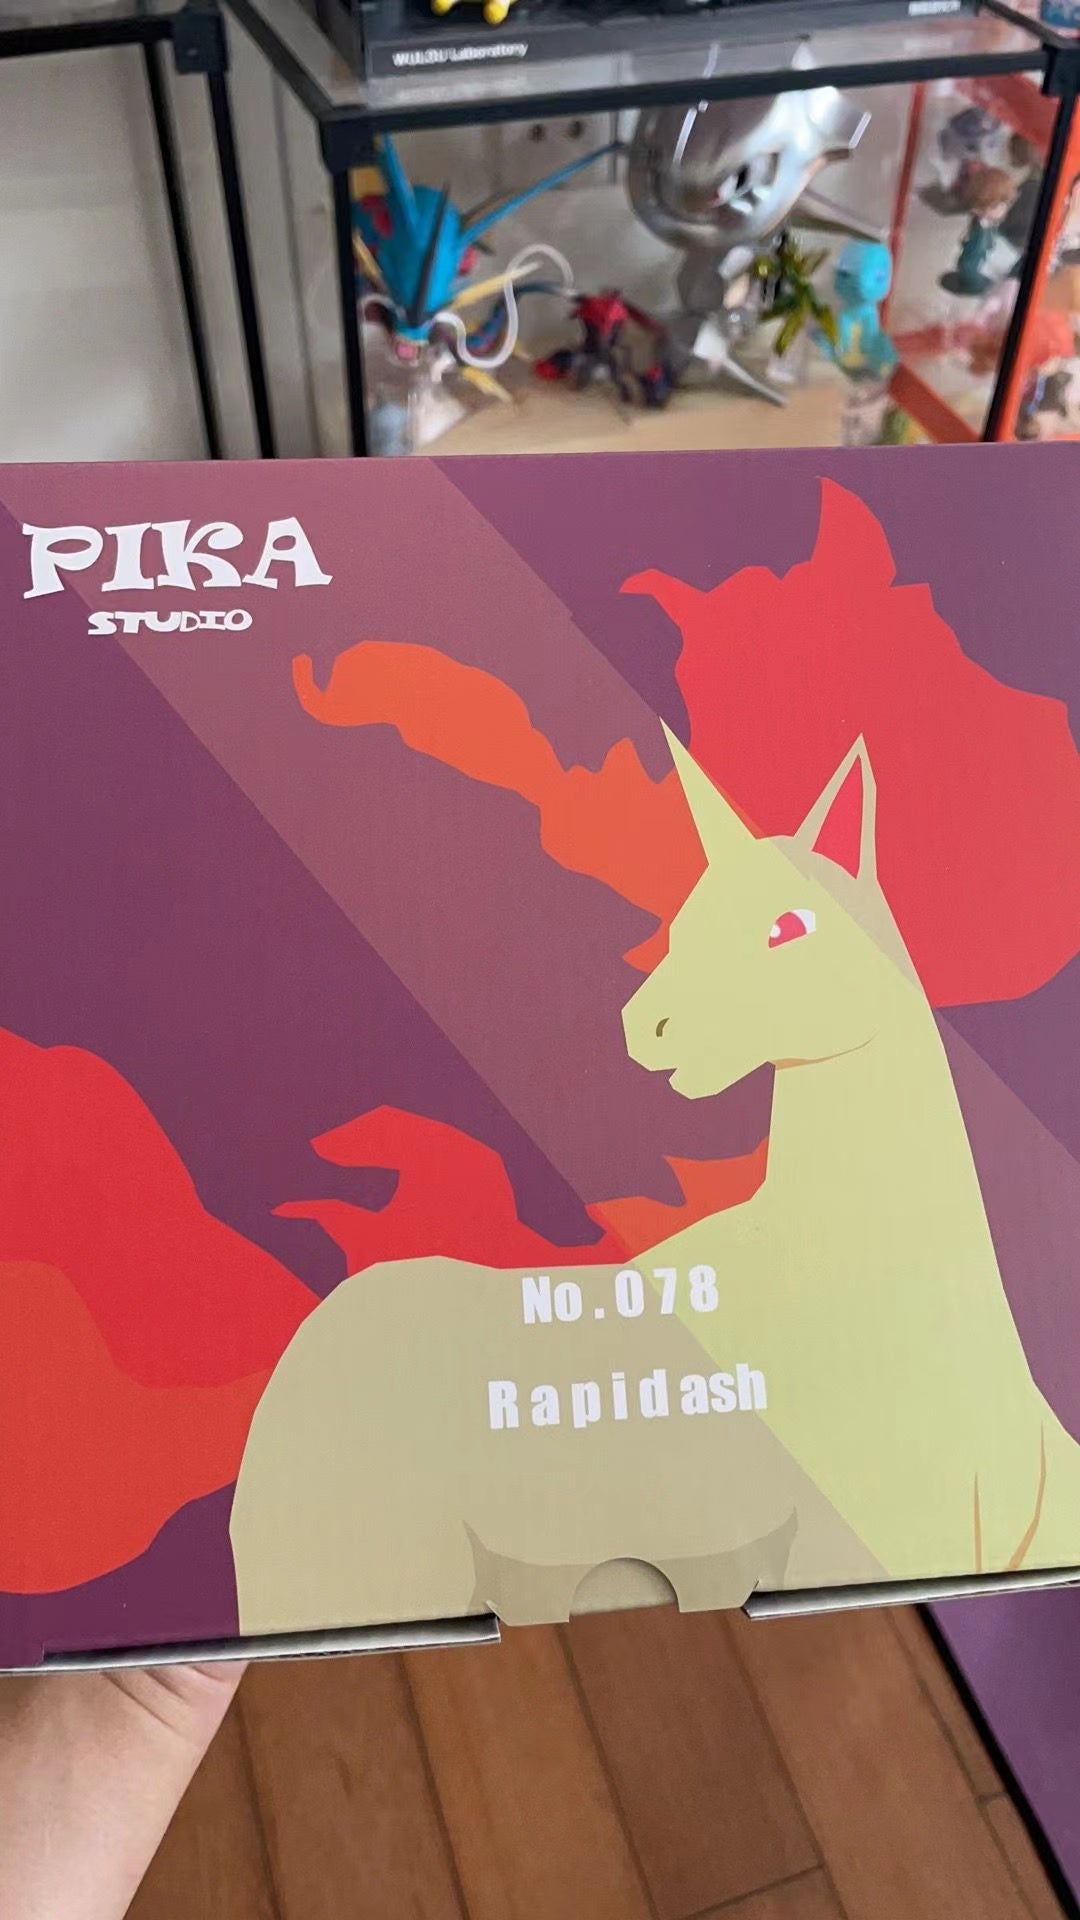 〖In Stock〗Pokemon Scale World Ponyta Rapidash #077 #078 1:20 - Pika Studio